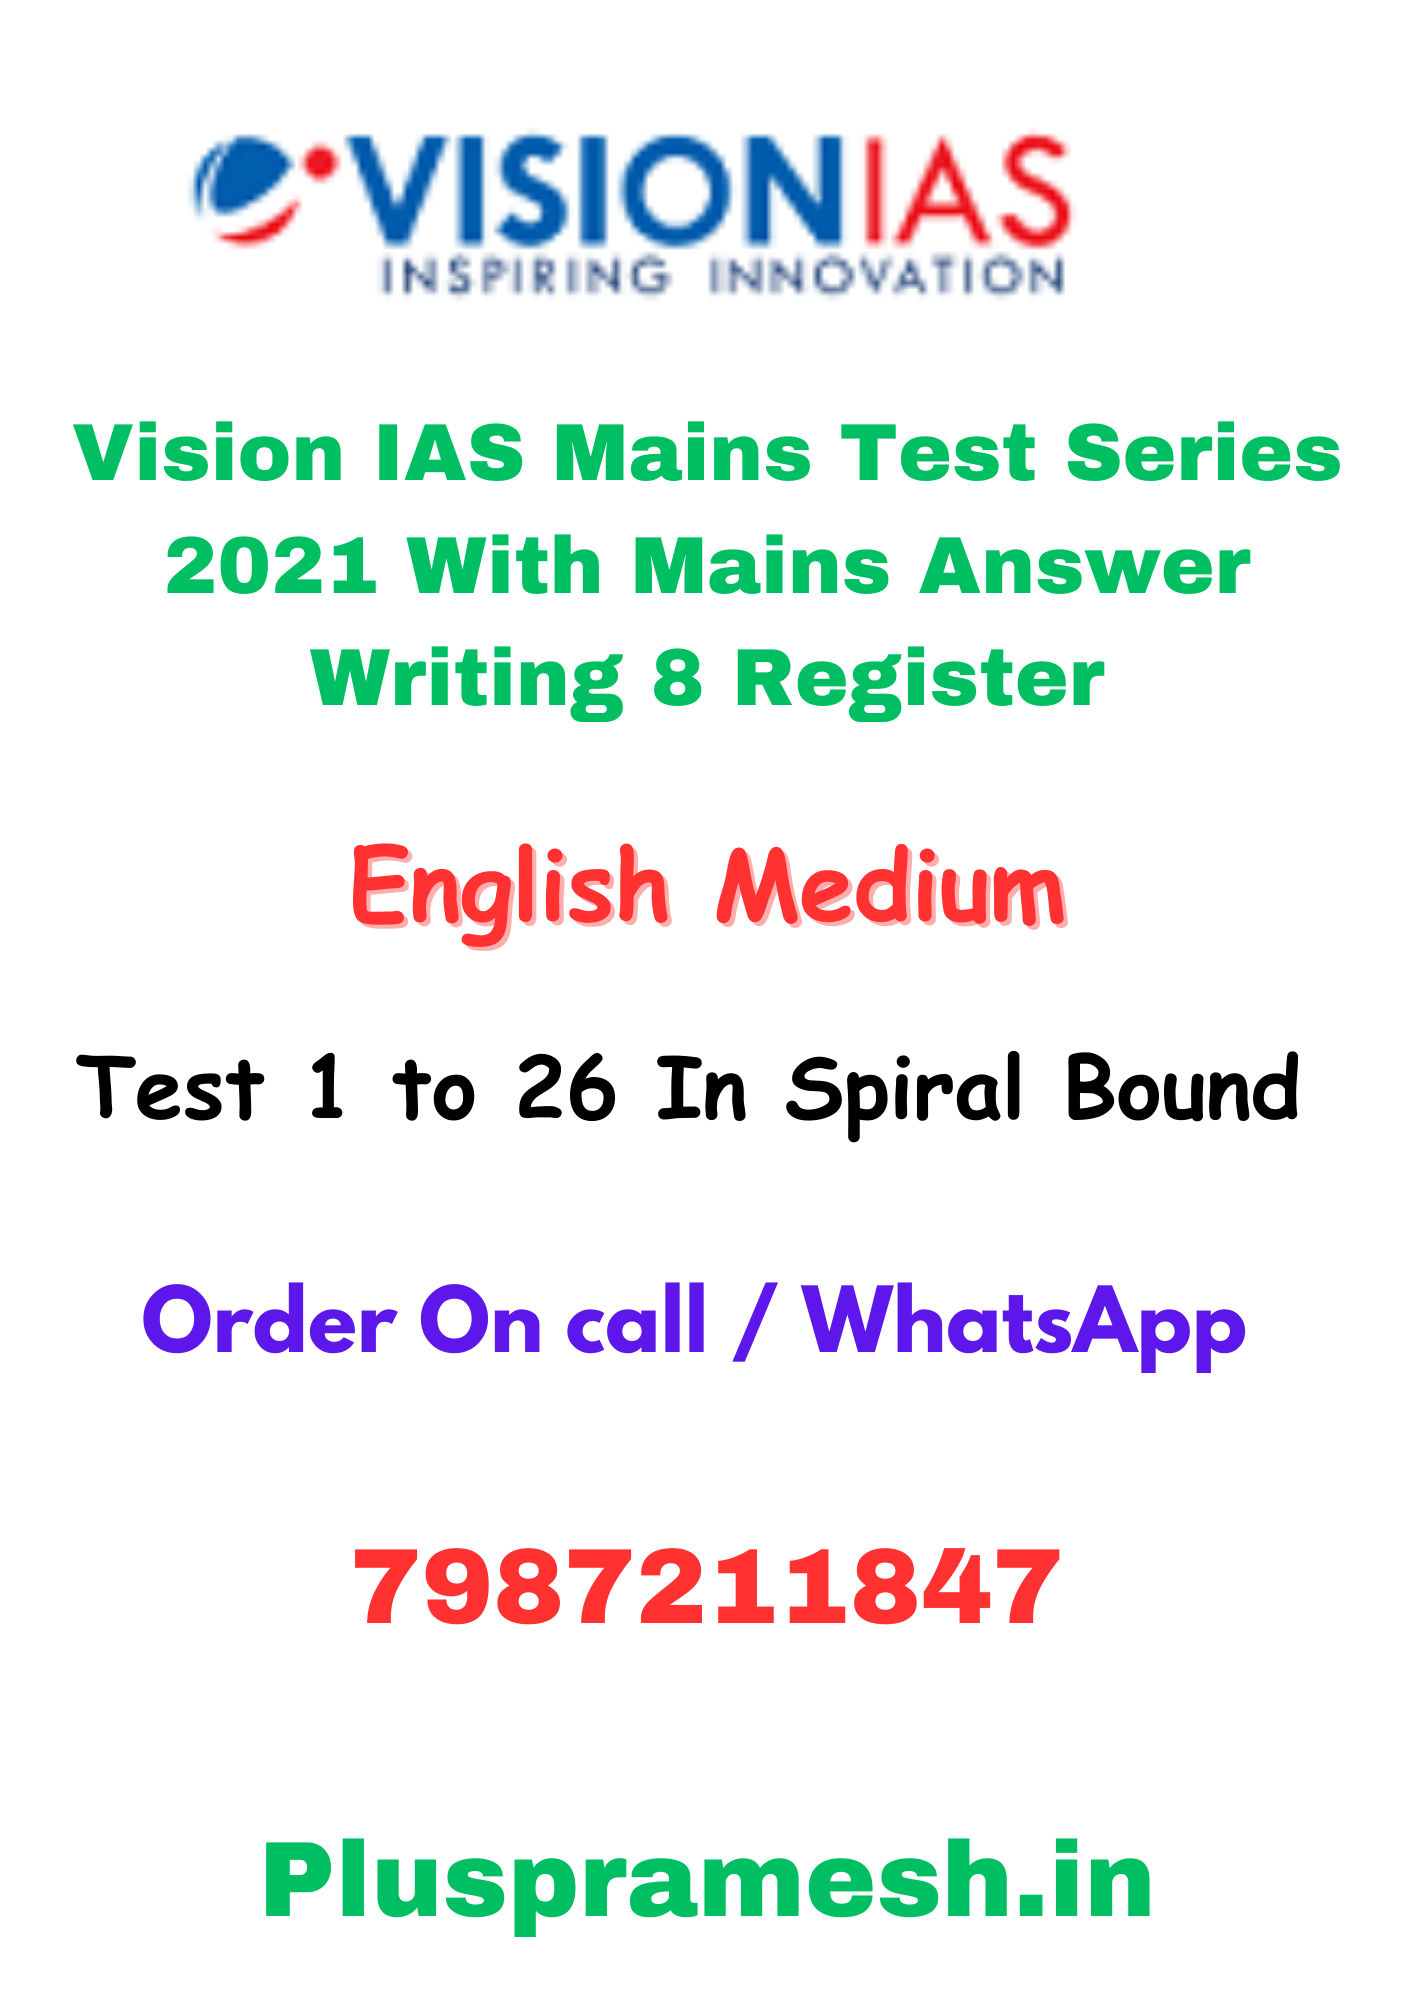 Vision IAS Mains Test Series